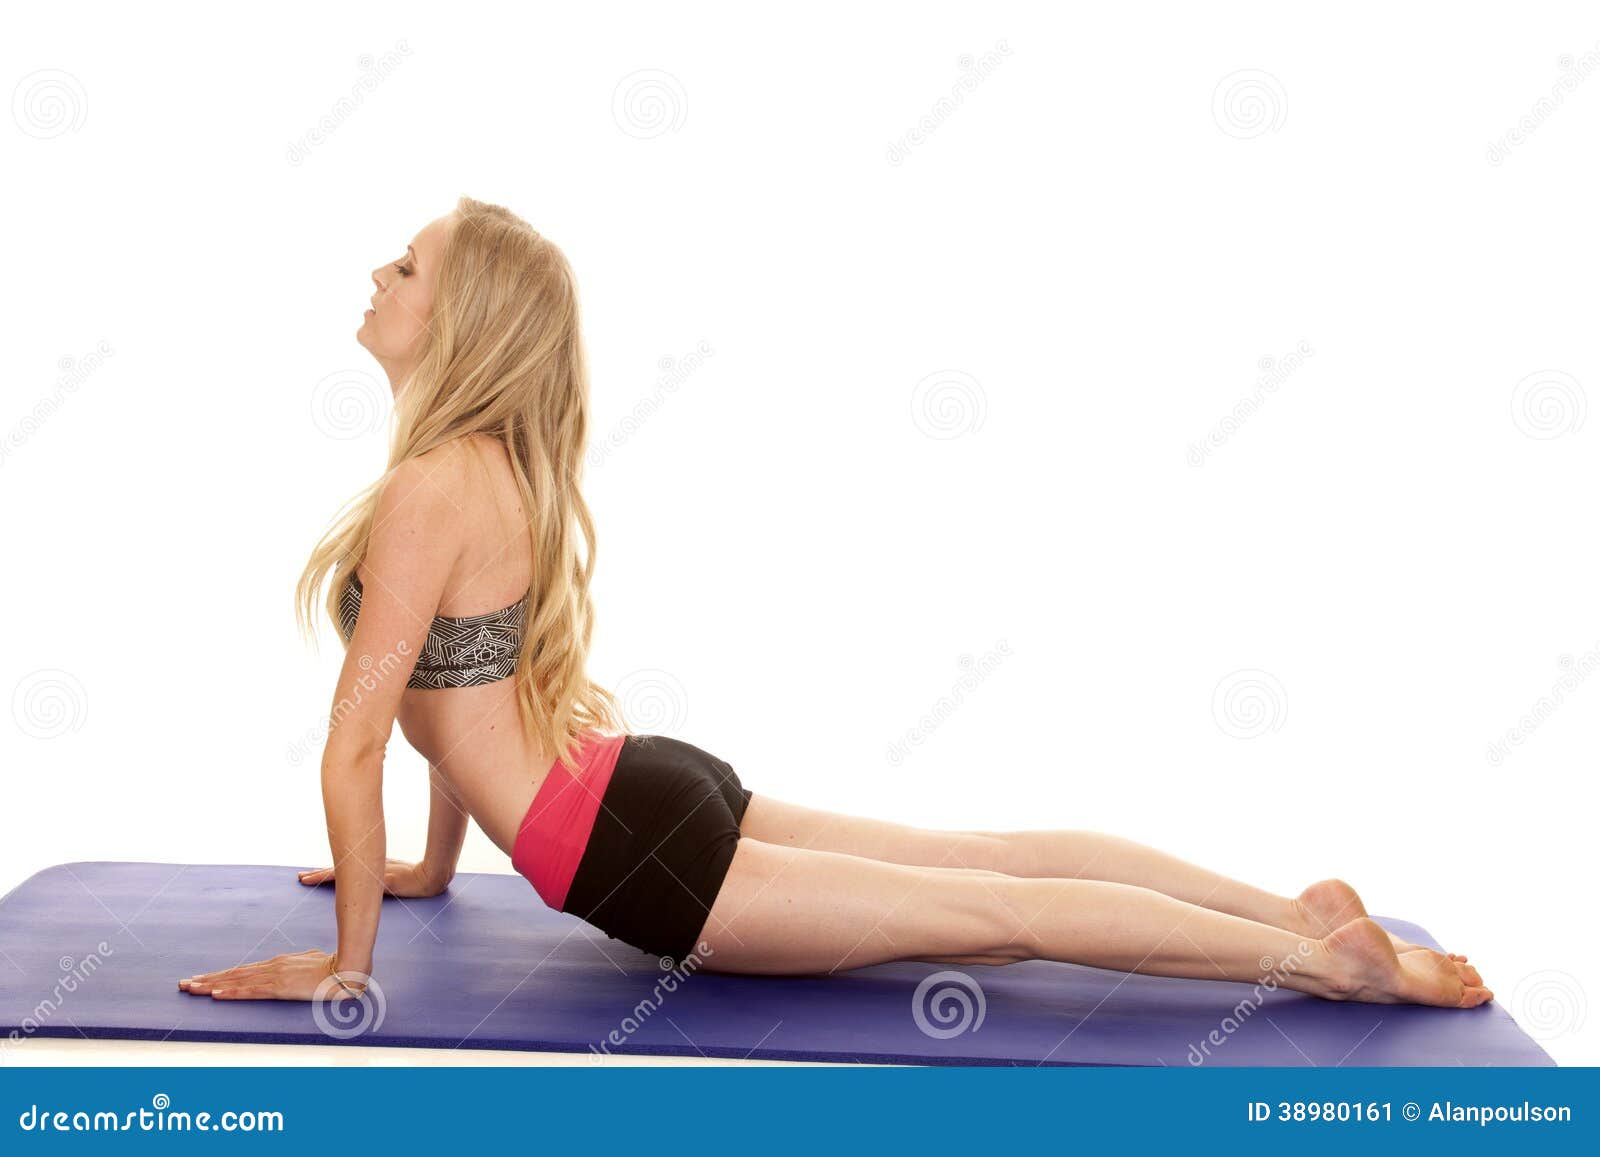 Woman fitness pink black shorts up dog. A woman doing yoga doing upward dog.